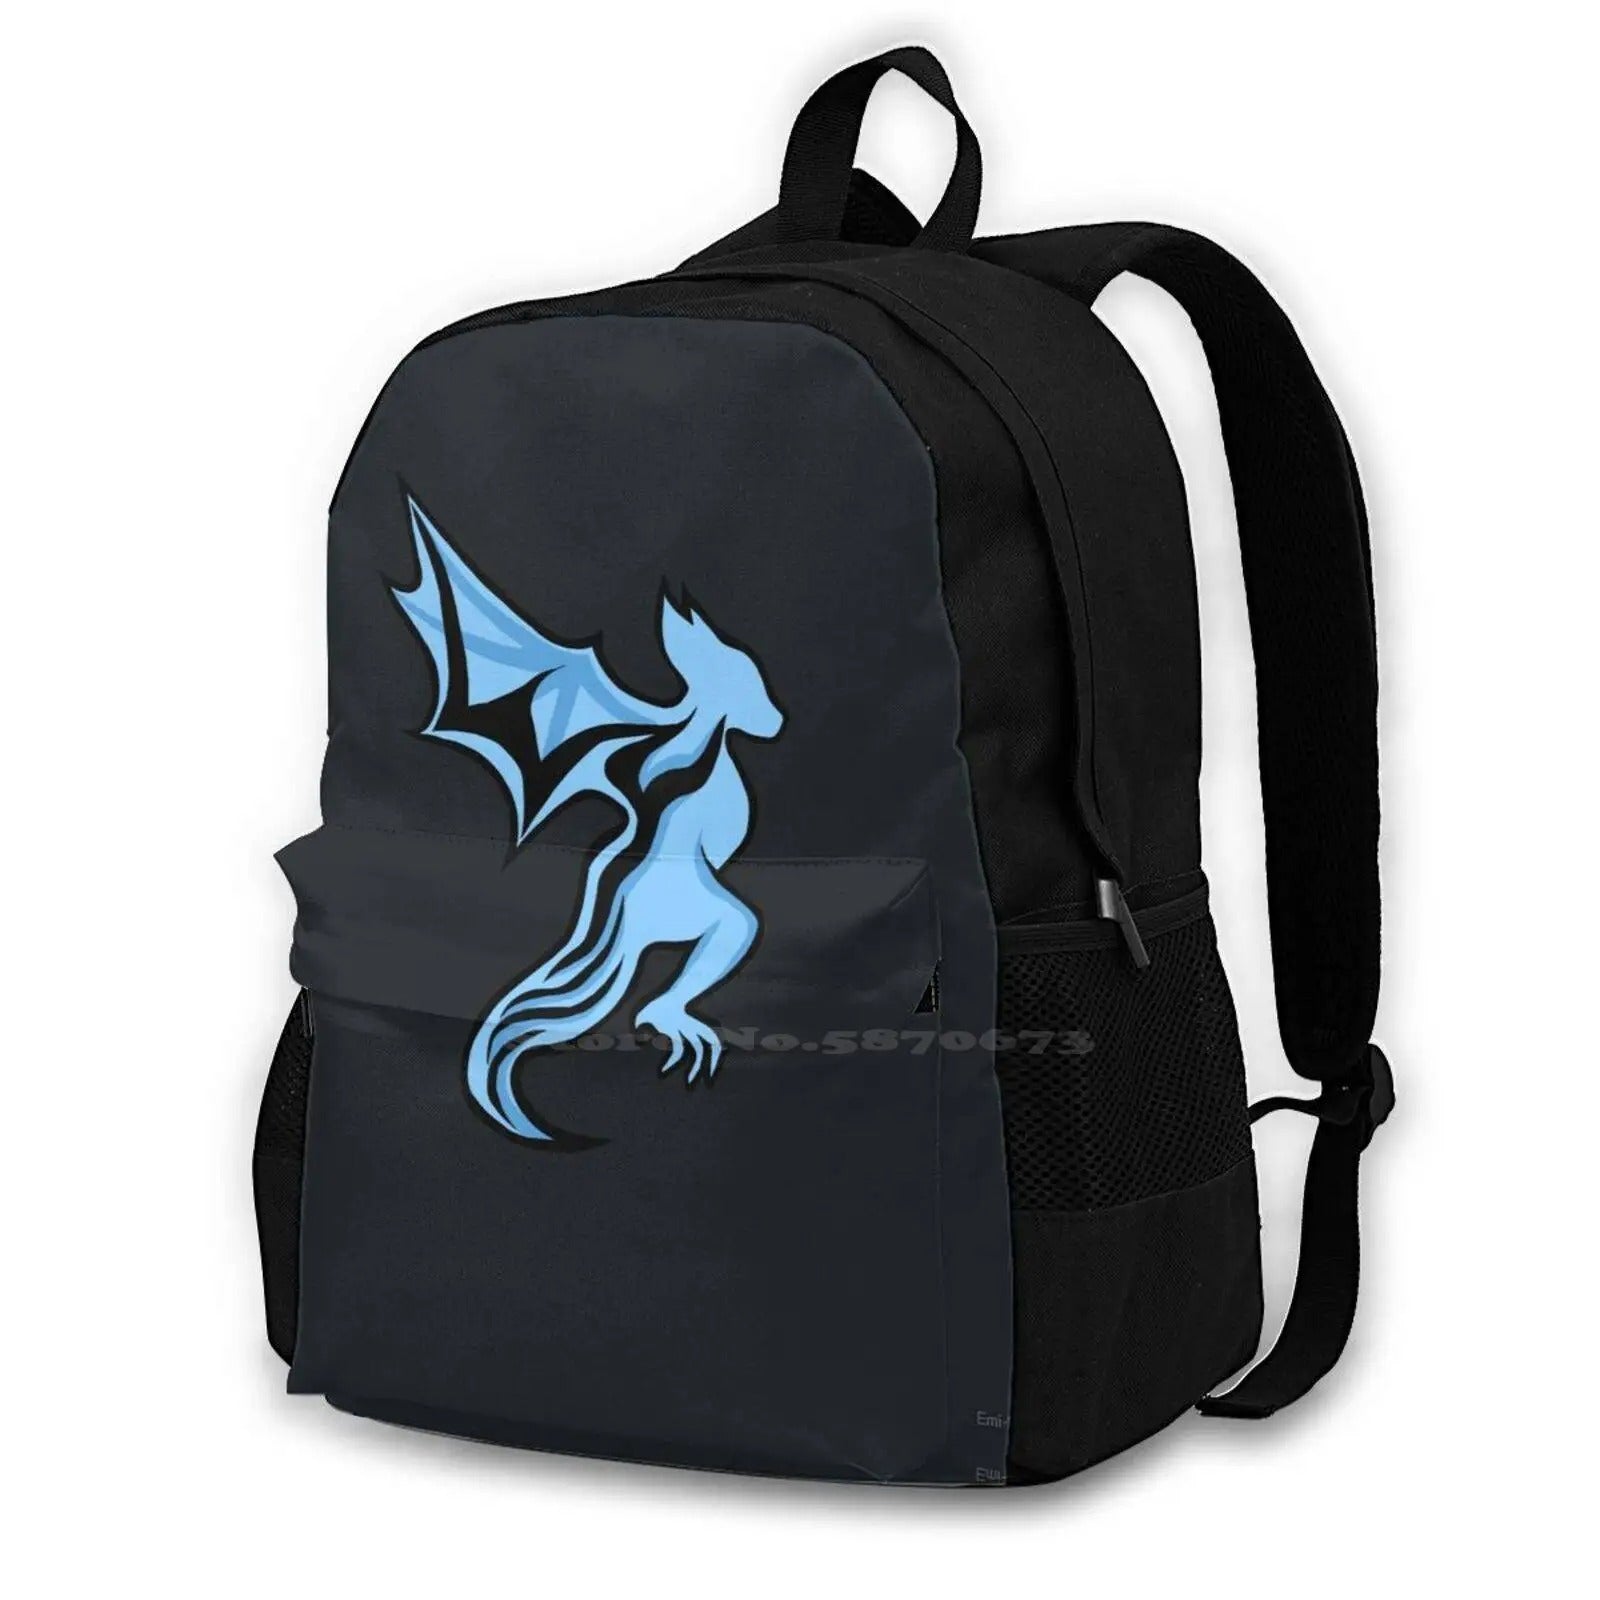 Backpack with Dragon Logo - Backpack - Black